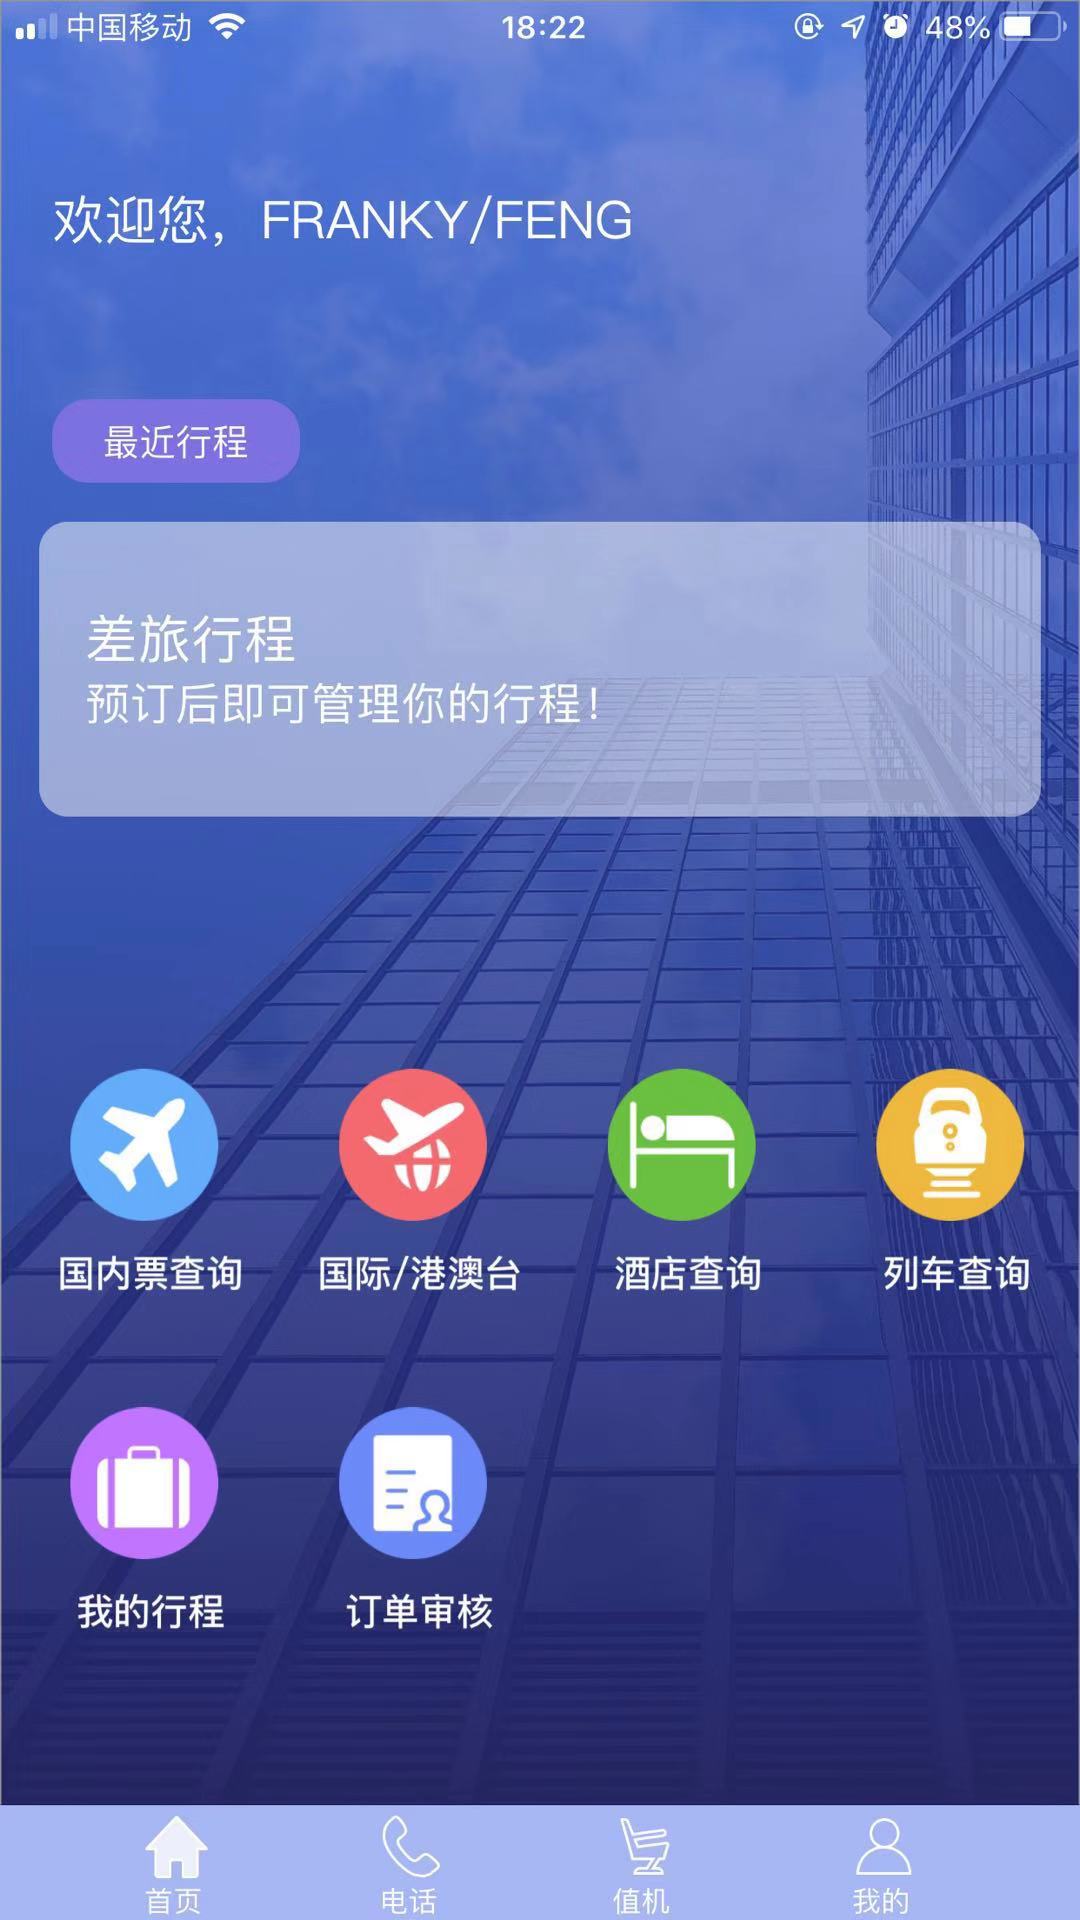 TripSource China appvAnd.1.2.6 °